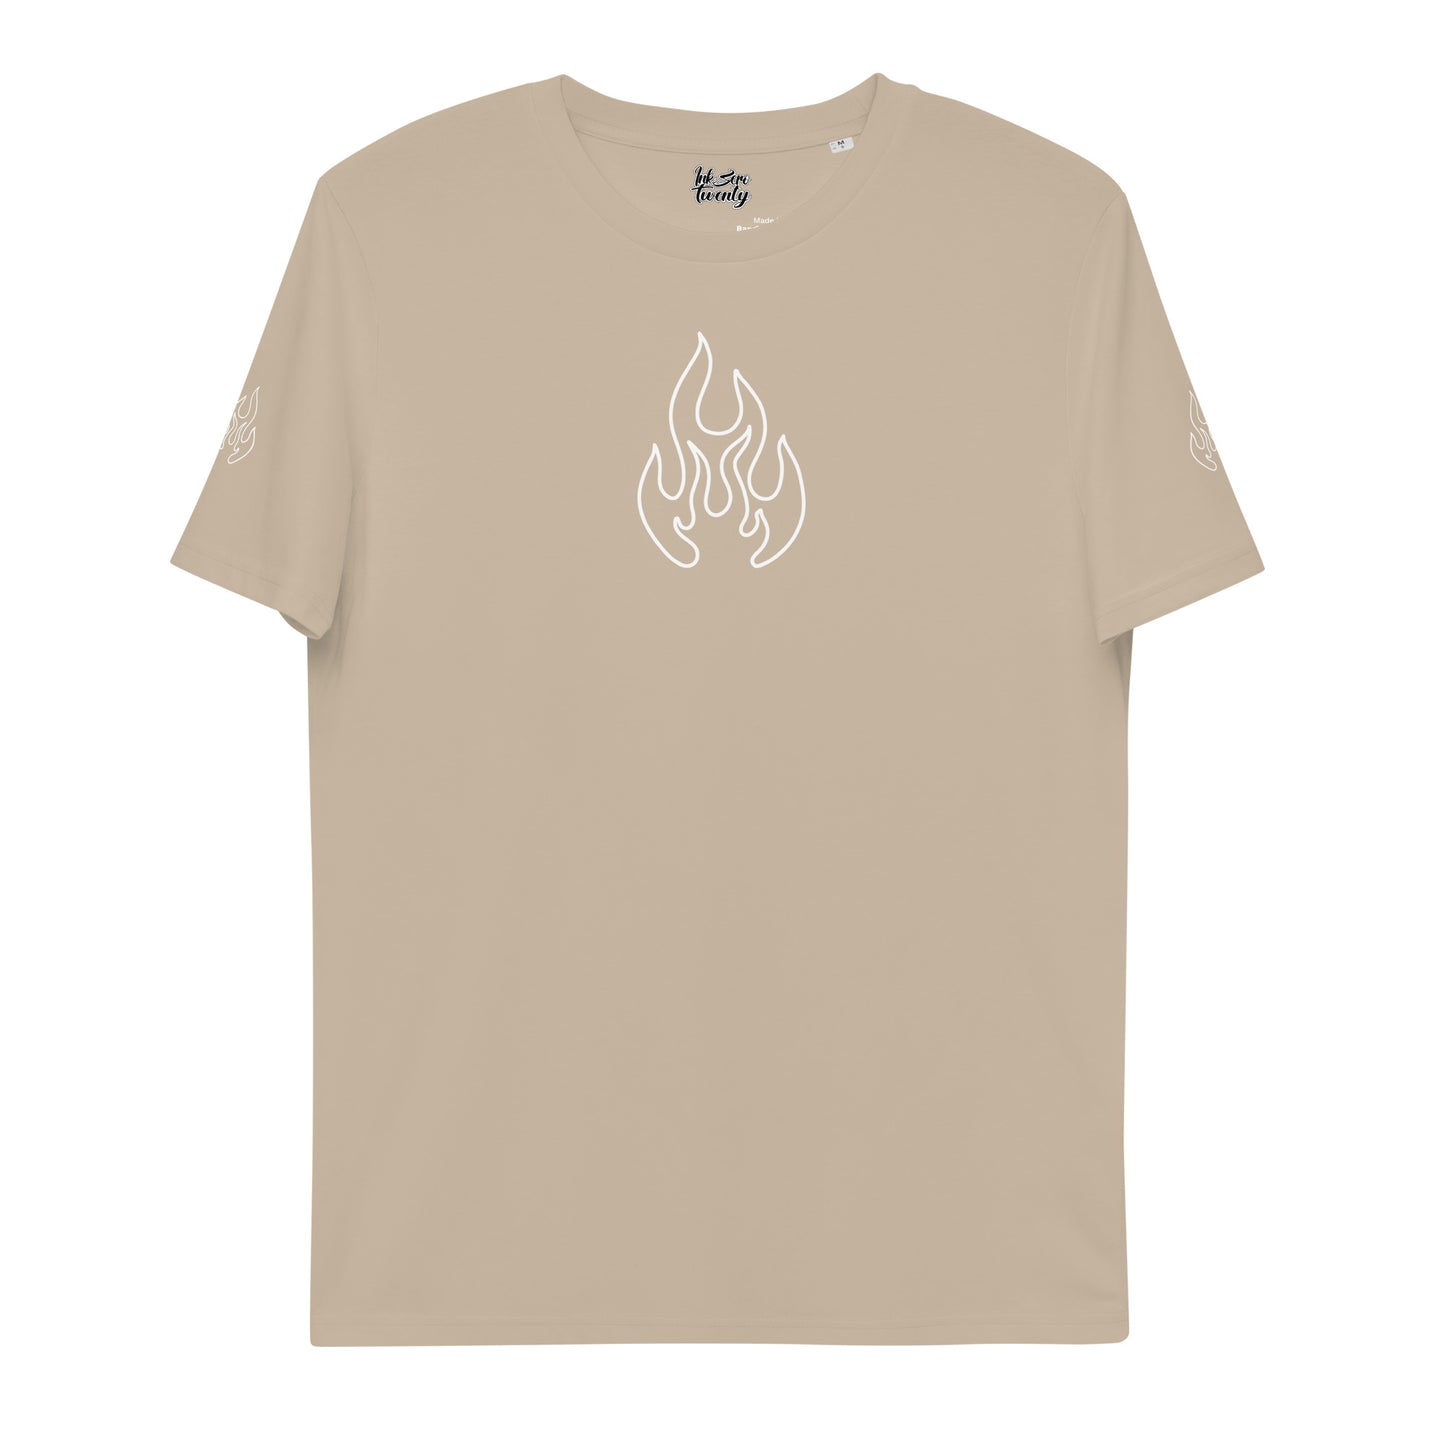 Unisex organic cotton t-shirt white flame tattoo print